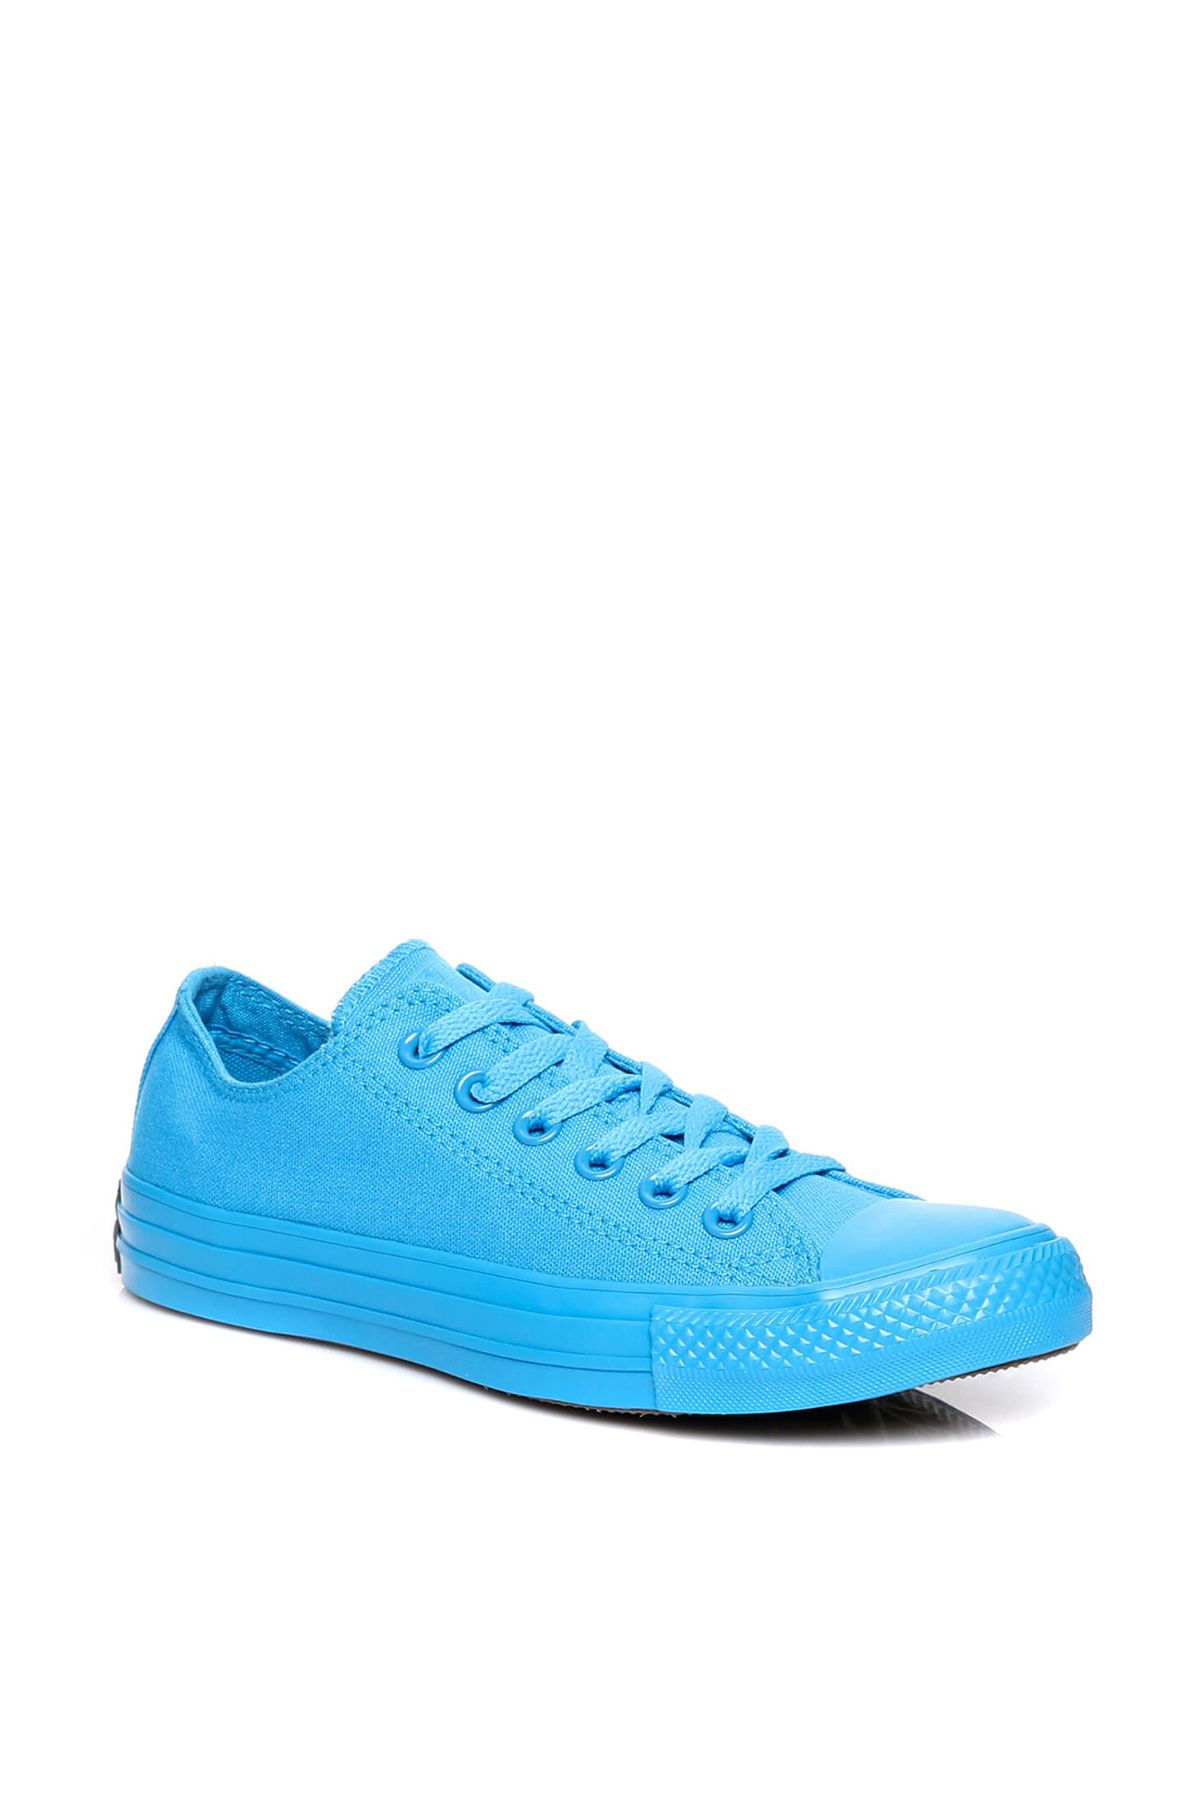 Converse Unisex Sneaker 152783C